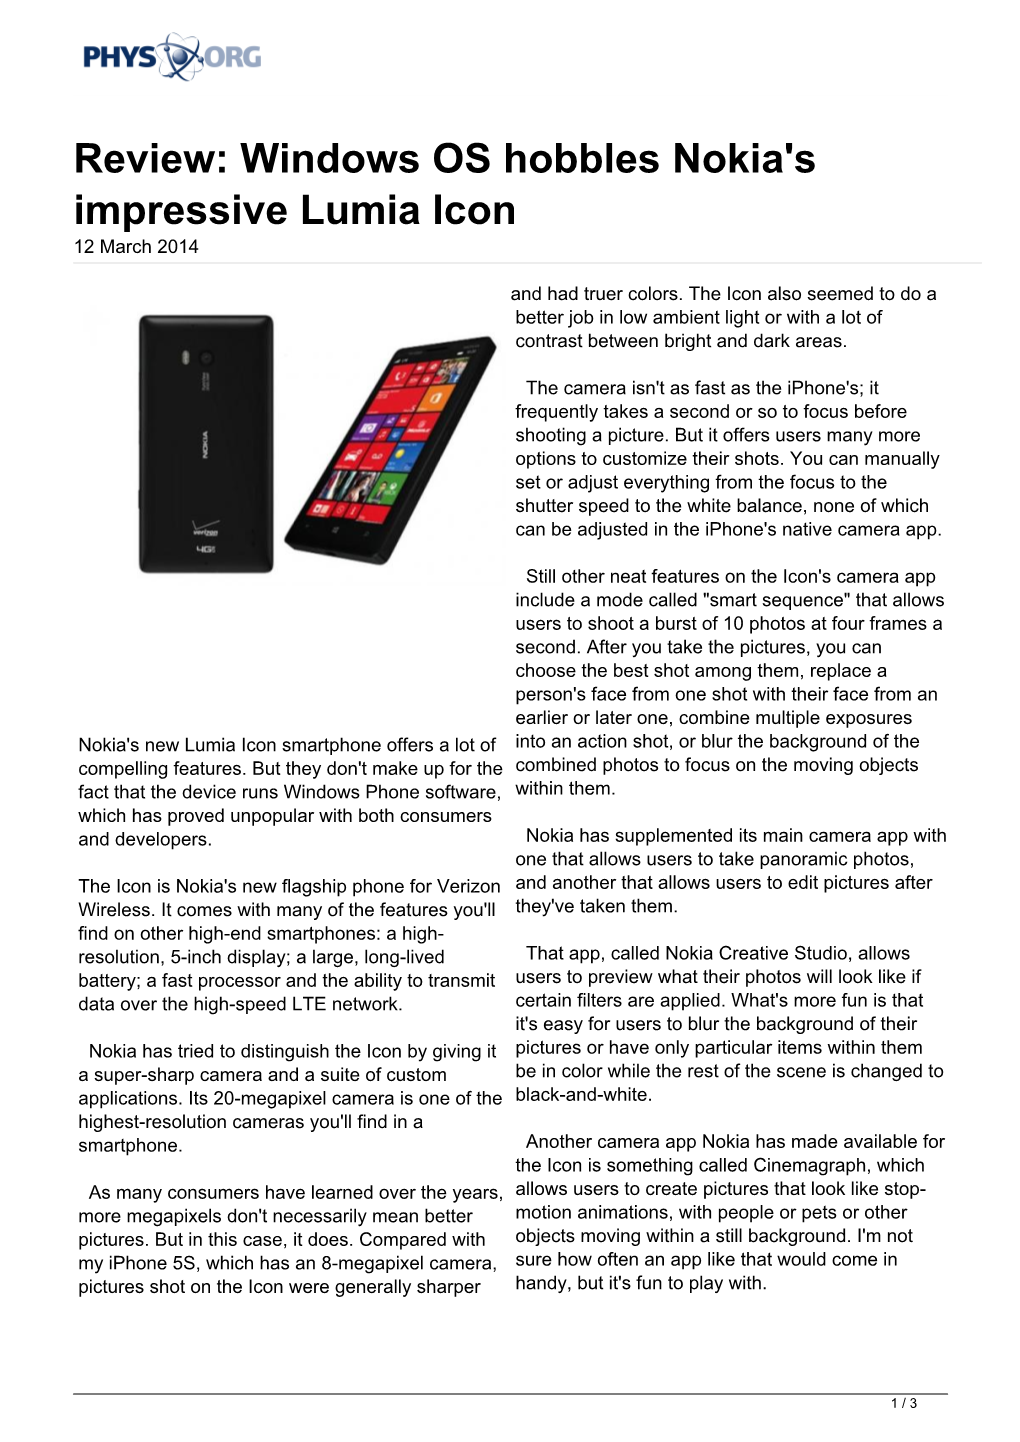 Windows OS Hobbles Nokia's Impressive Lumia Icon 12 March 2014